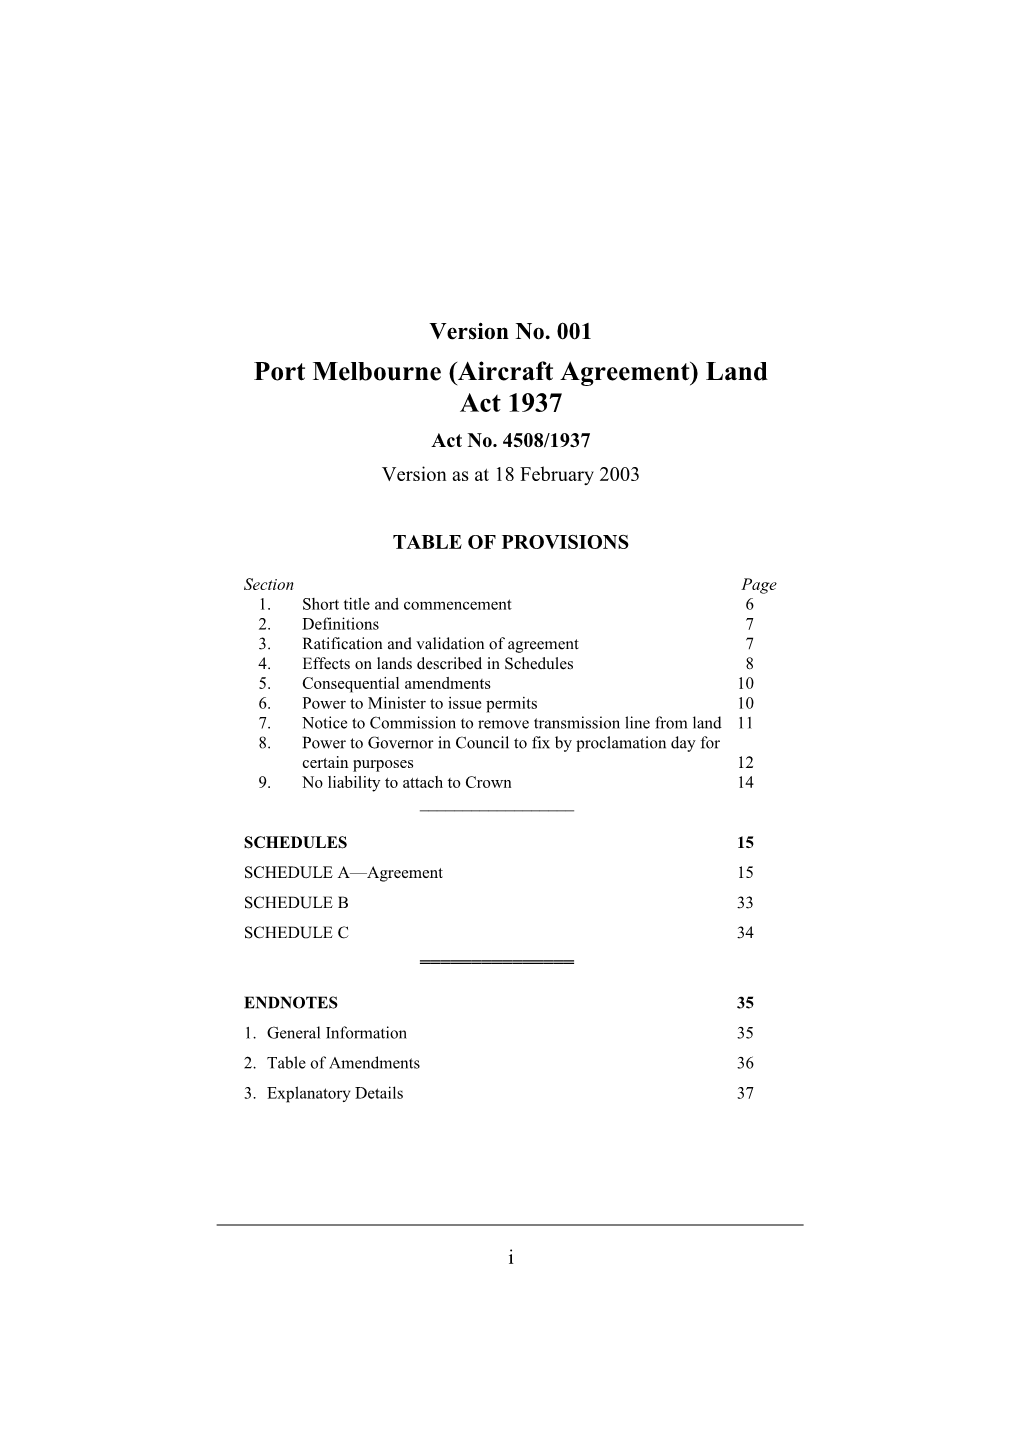 Port Melbourne (Aircraft Agreement) Land Act 1937